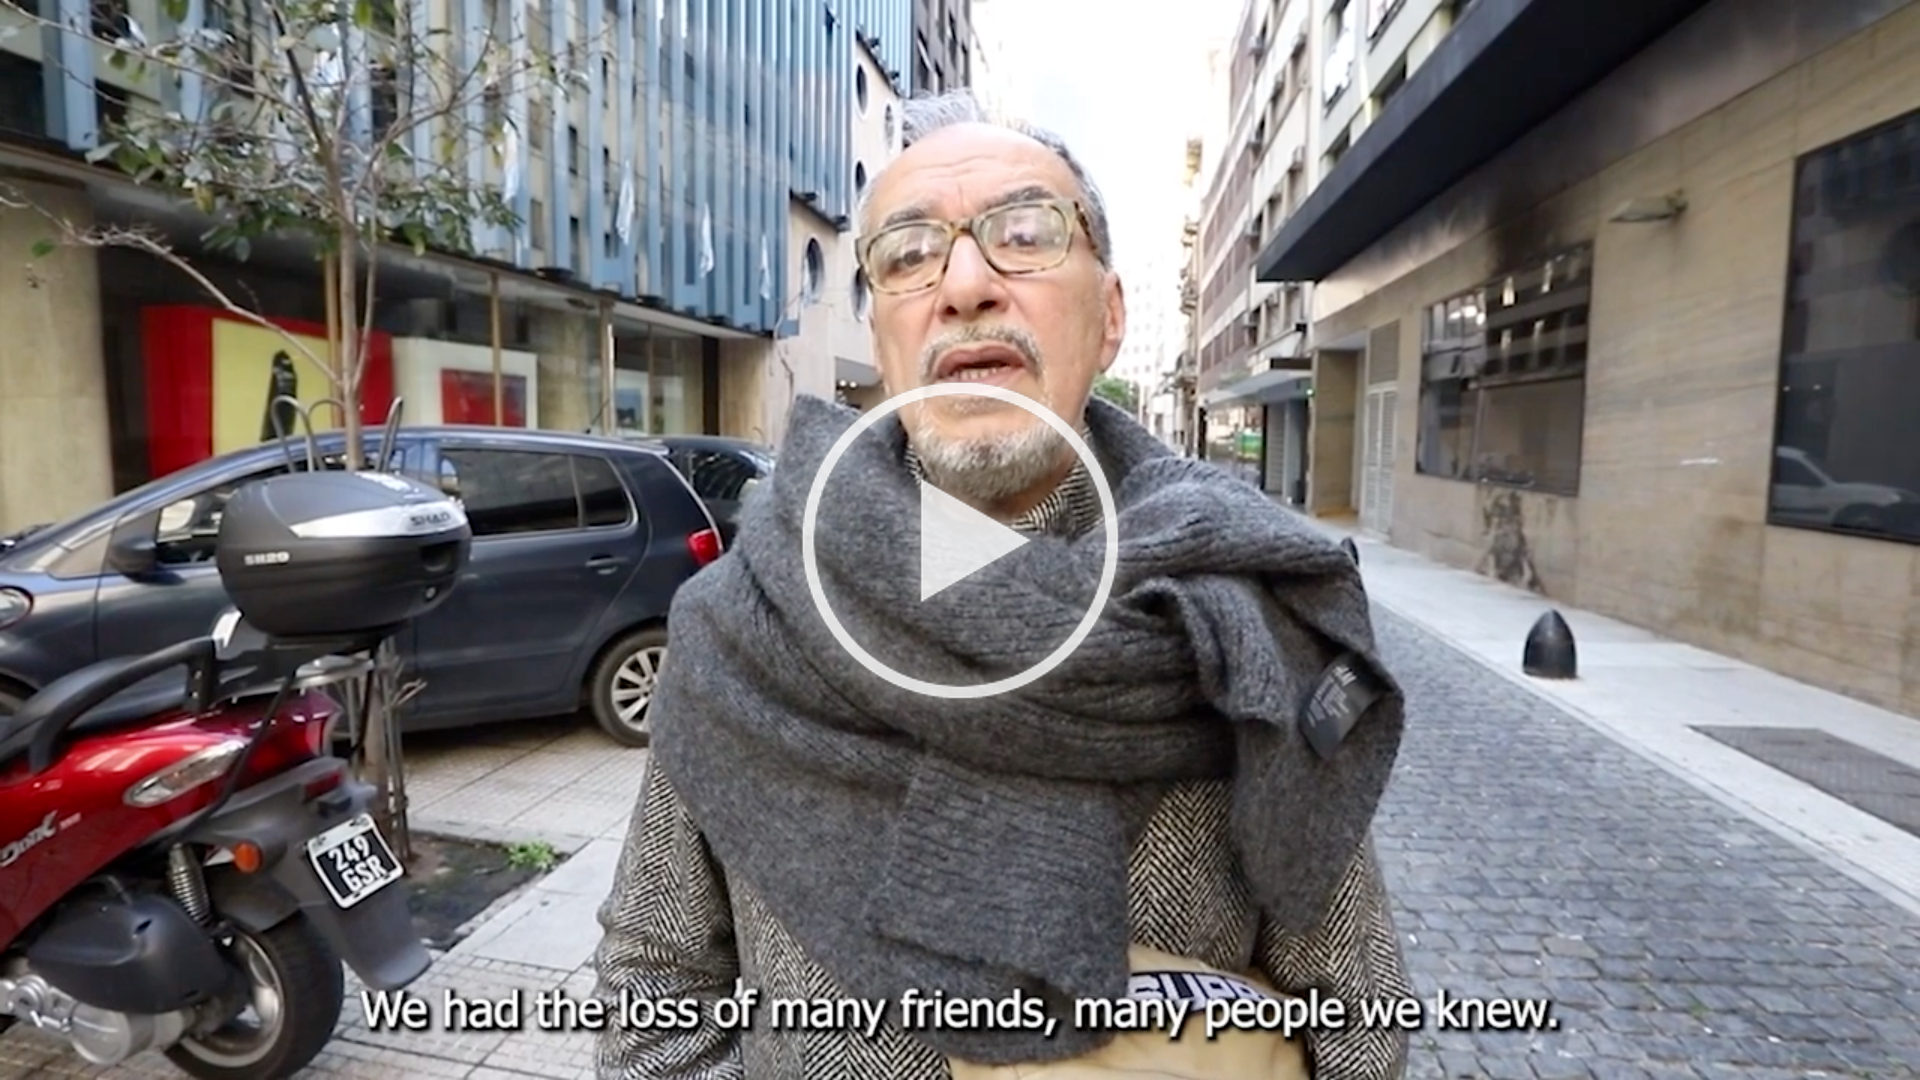 Video: COVID survivors speak to G20